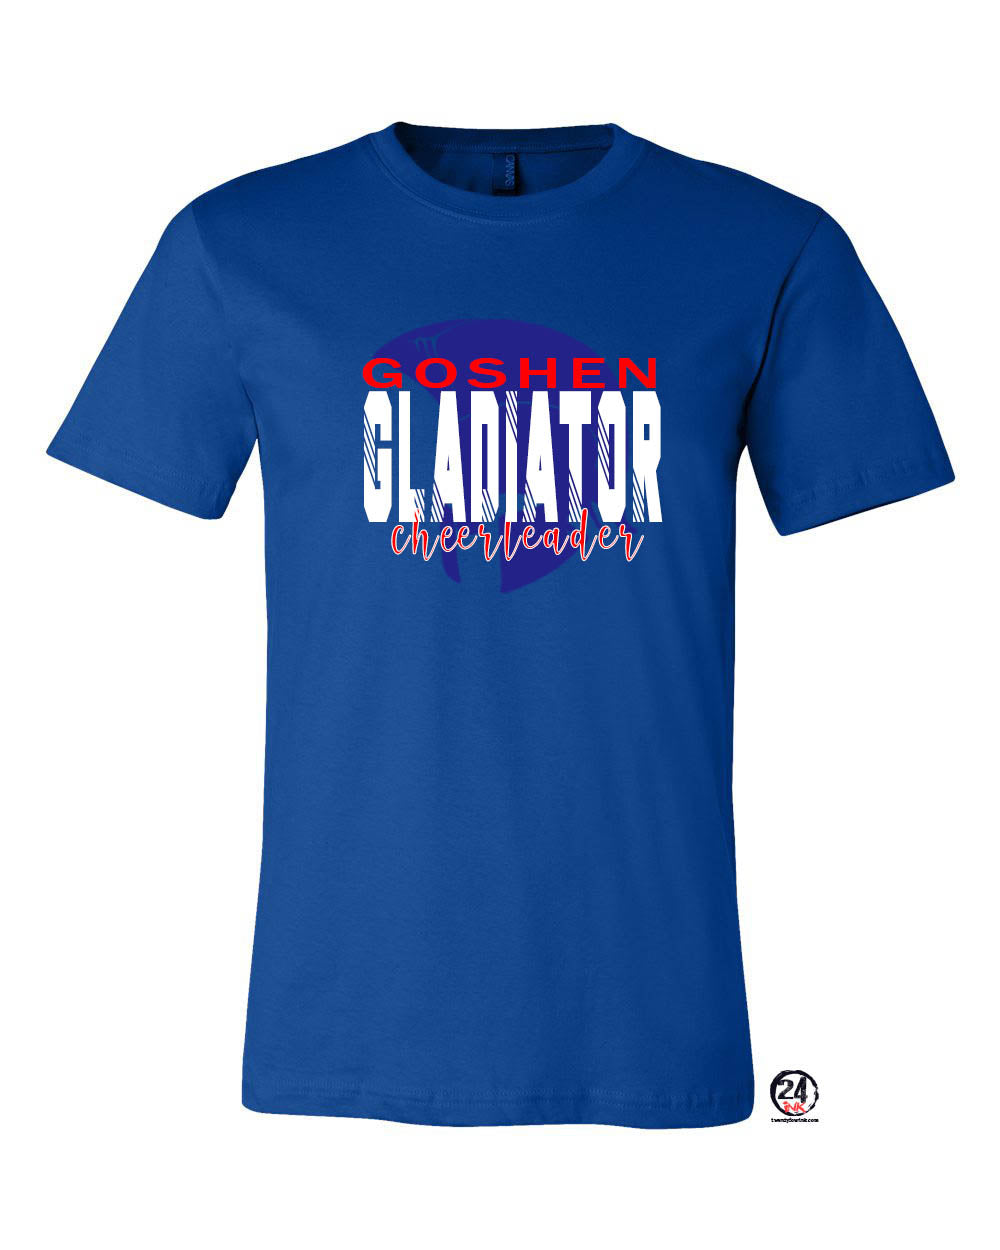 Goshen Gladiator Cheerleading t-Shirt